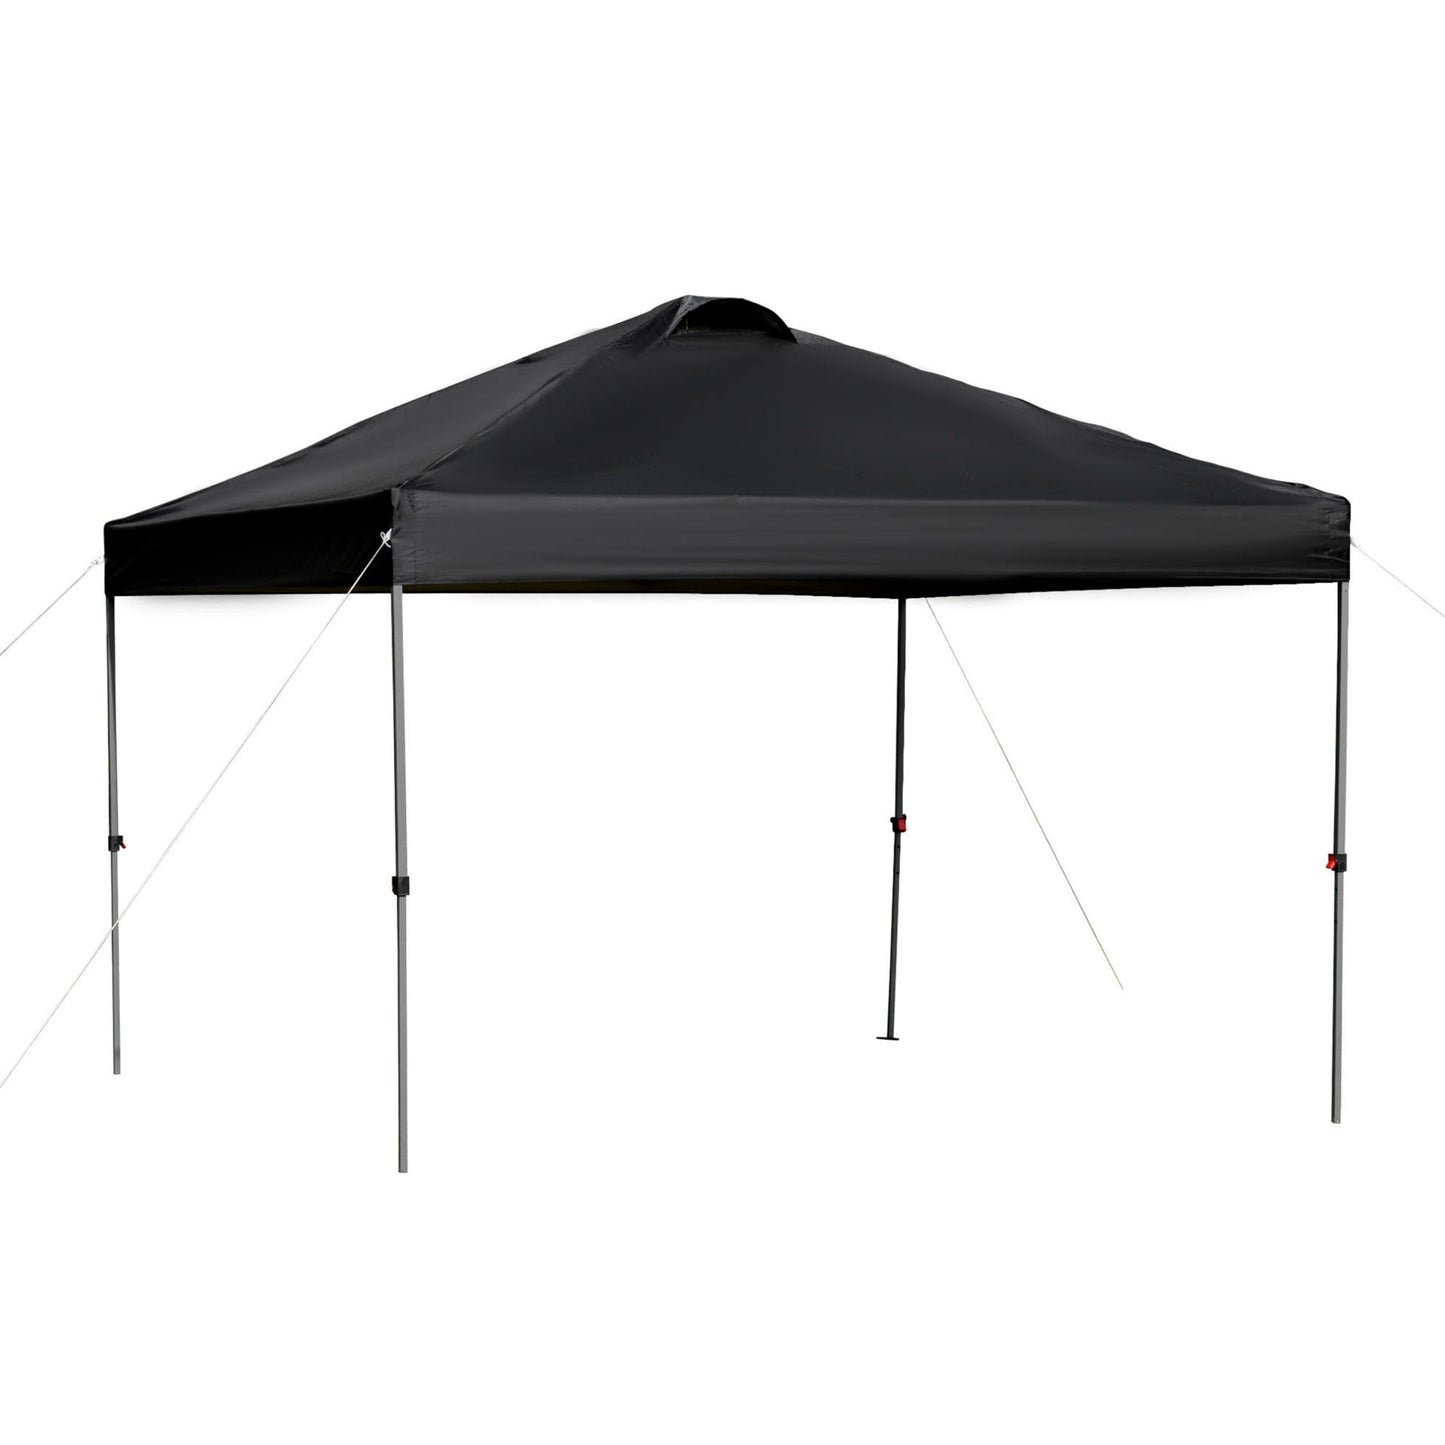 Nancy's Bird Rock Garden Party Tent - Pavilion - Foldable - Black - Steel, Oxford Fabric - ± 300 x 300 cm